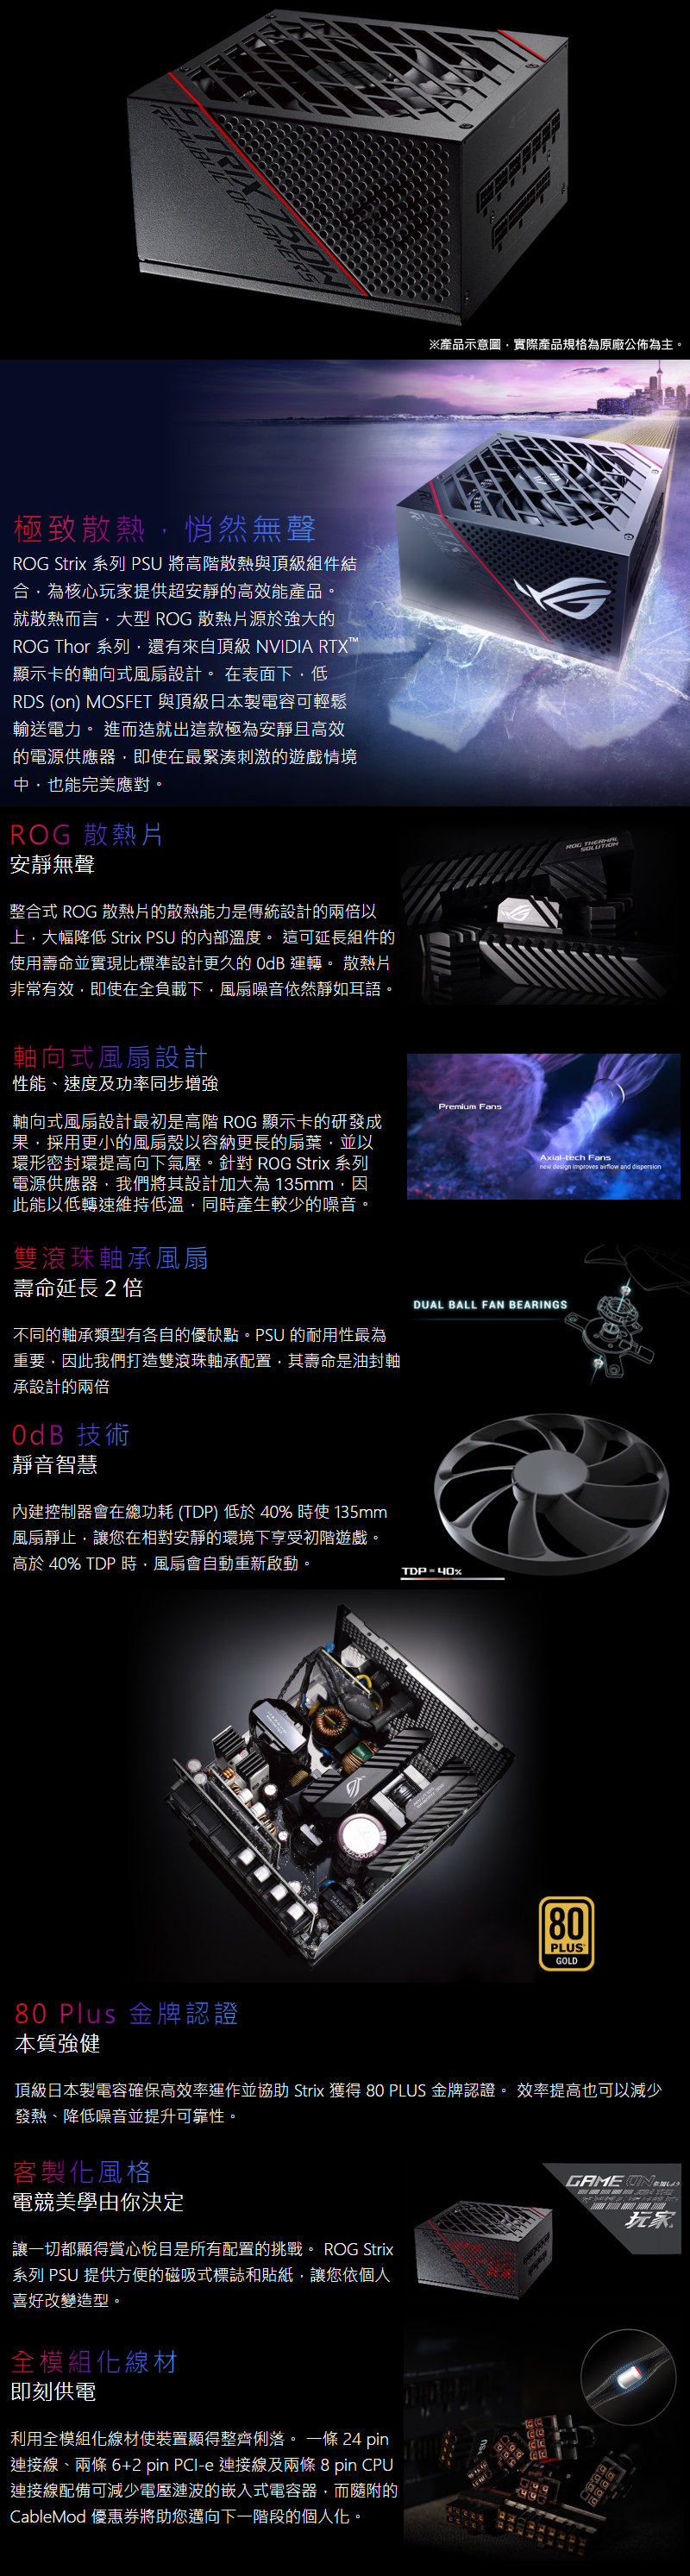 ASUS 華碩 ROG-STRIX-850G 850W 金牌 全模組 電源供應器 (10年保)《黑》